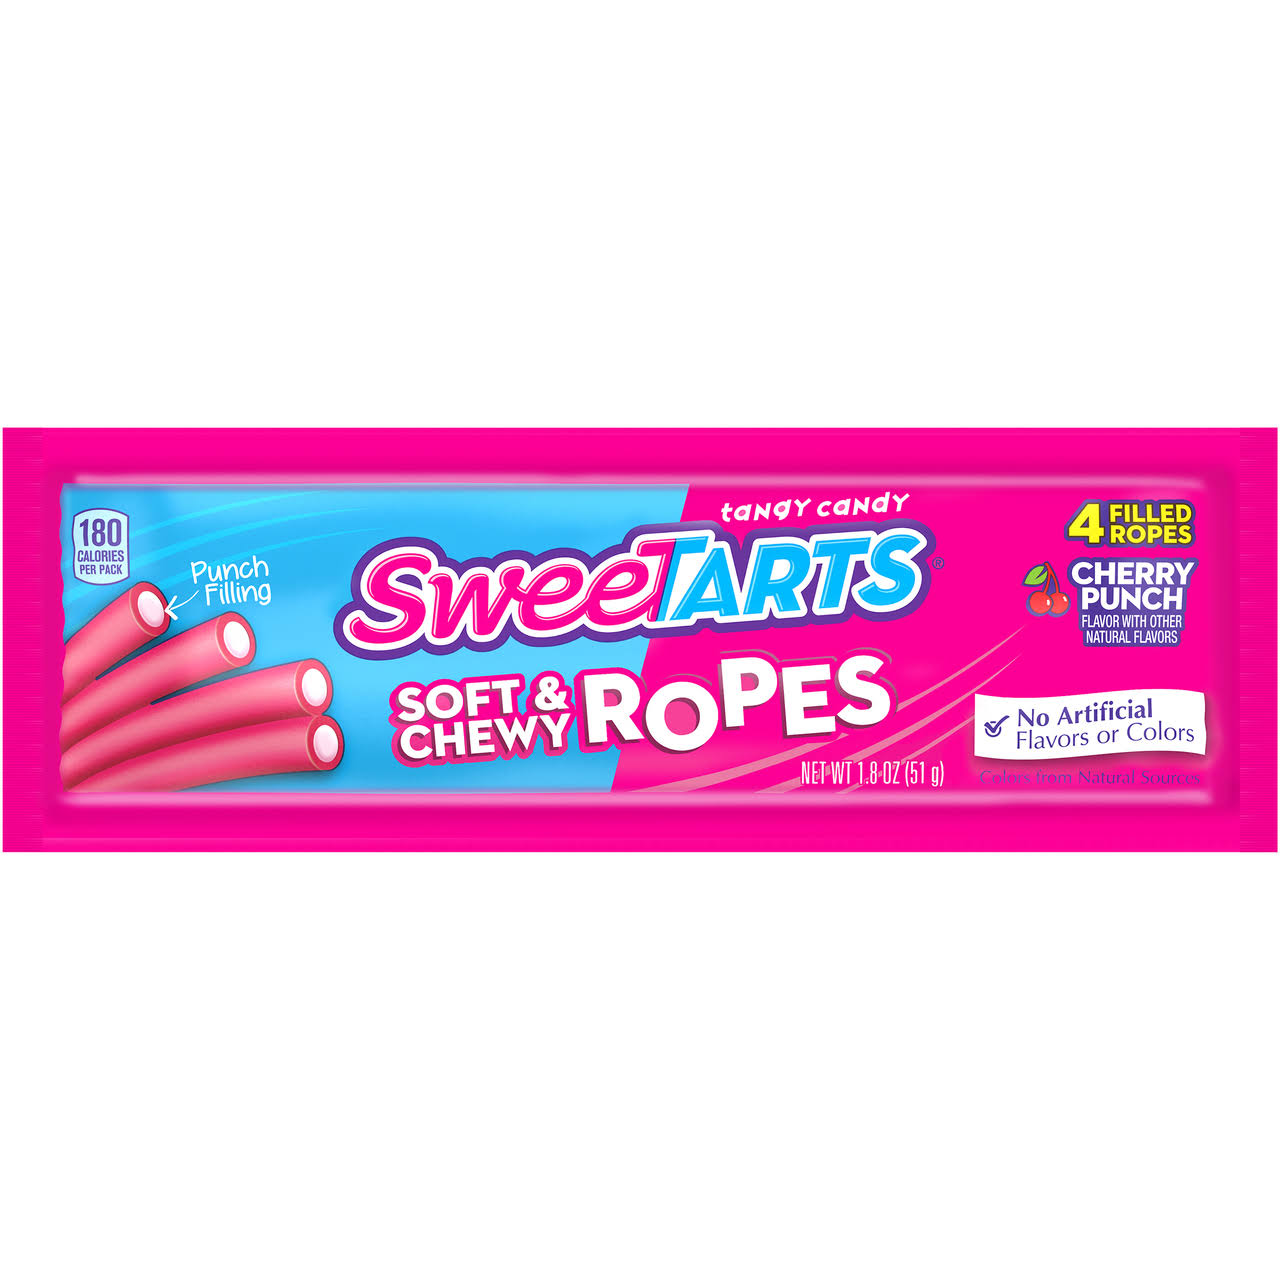 Wonka Sweettarts Soft Chewy & Rope - Cherry Punch, x4